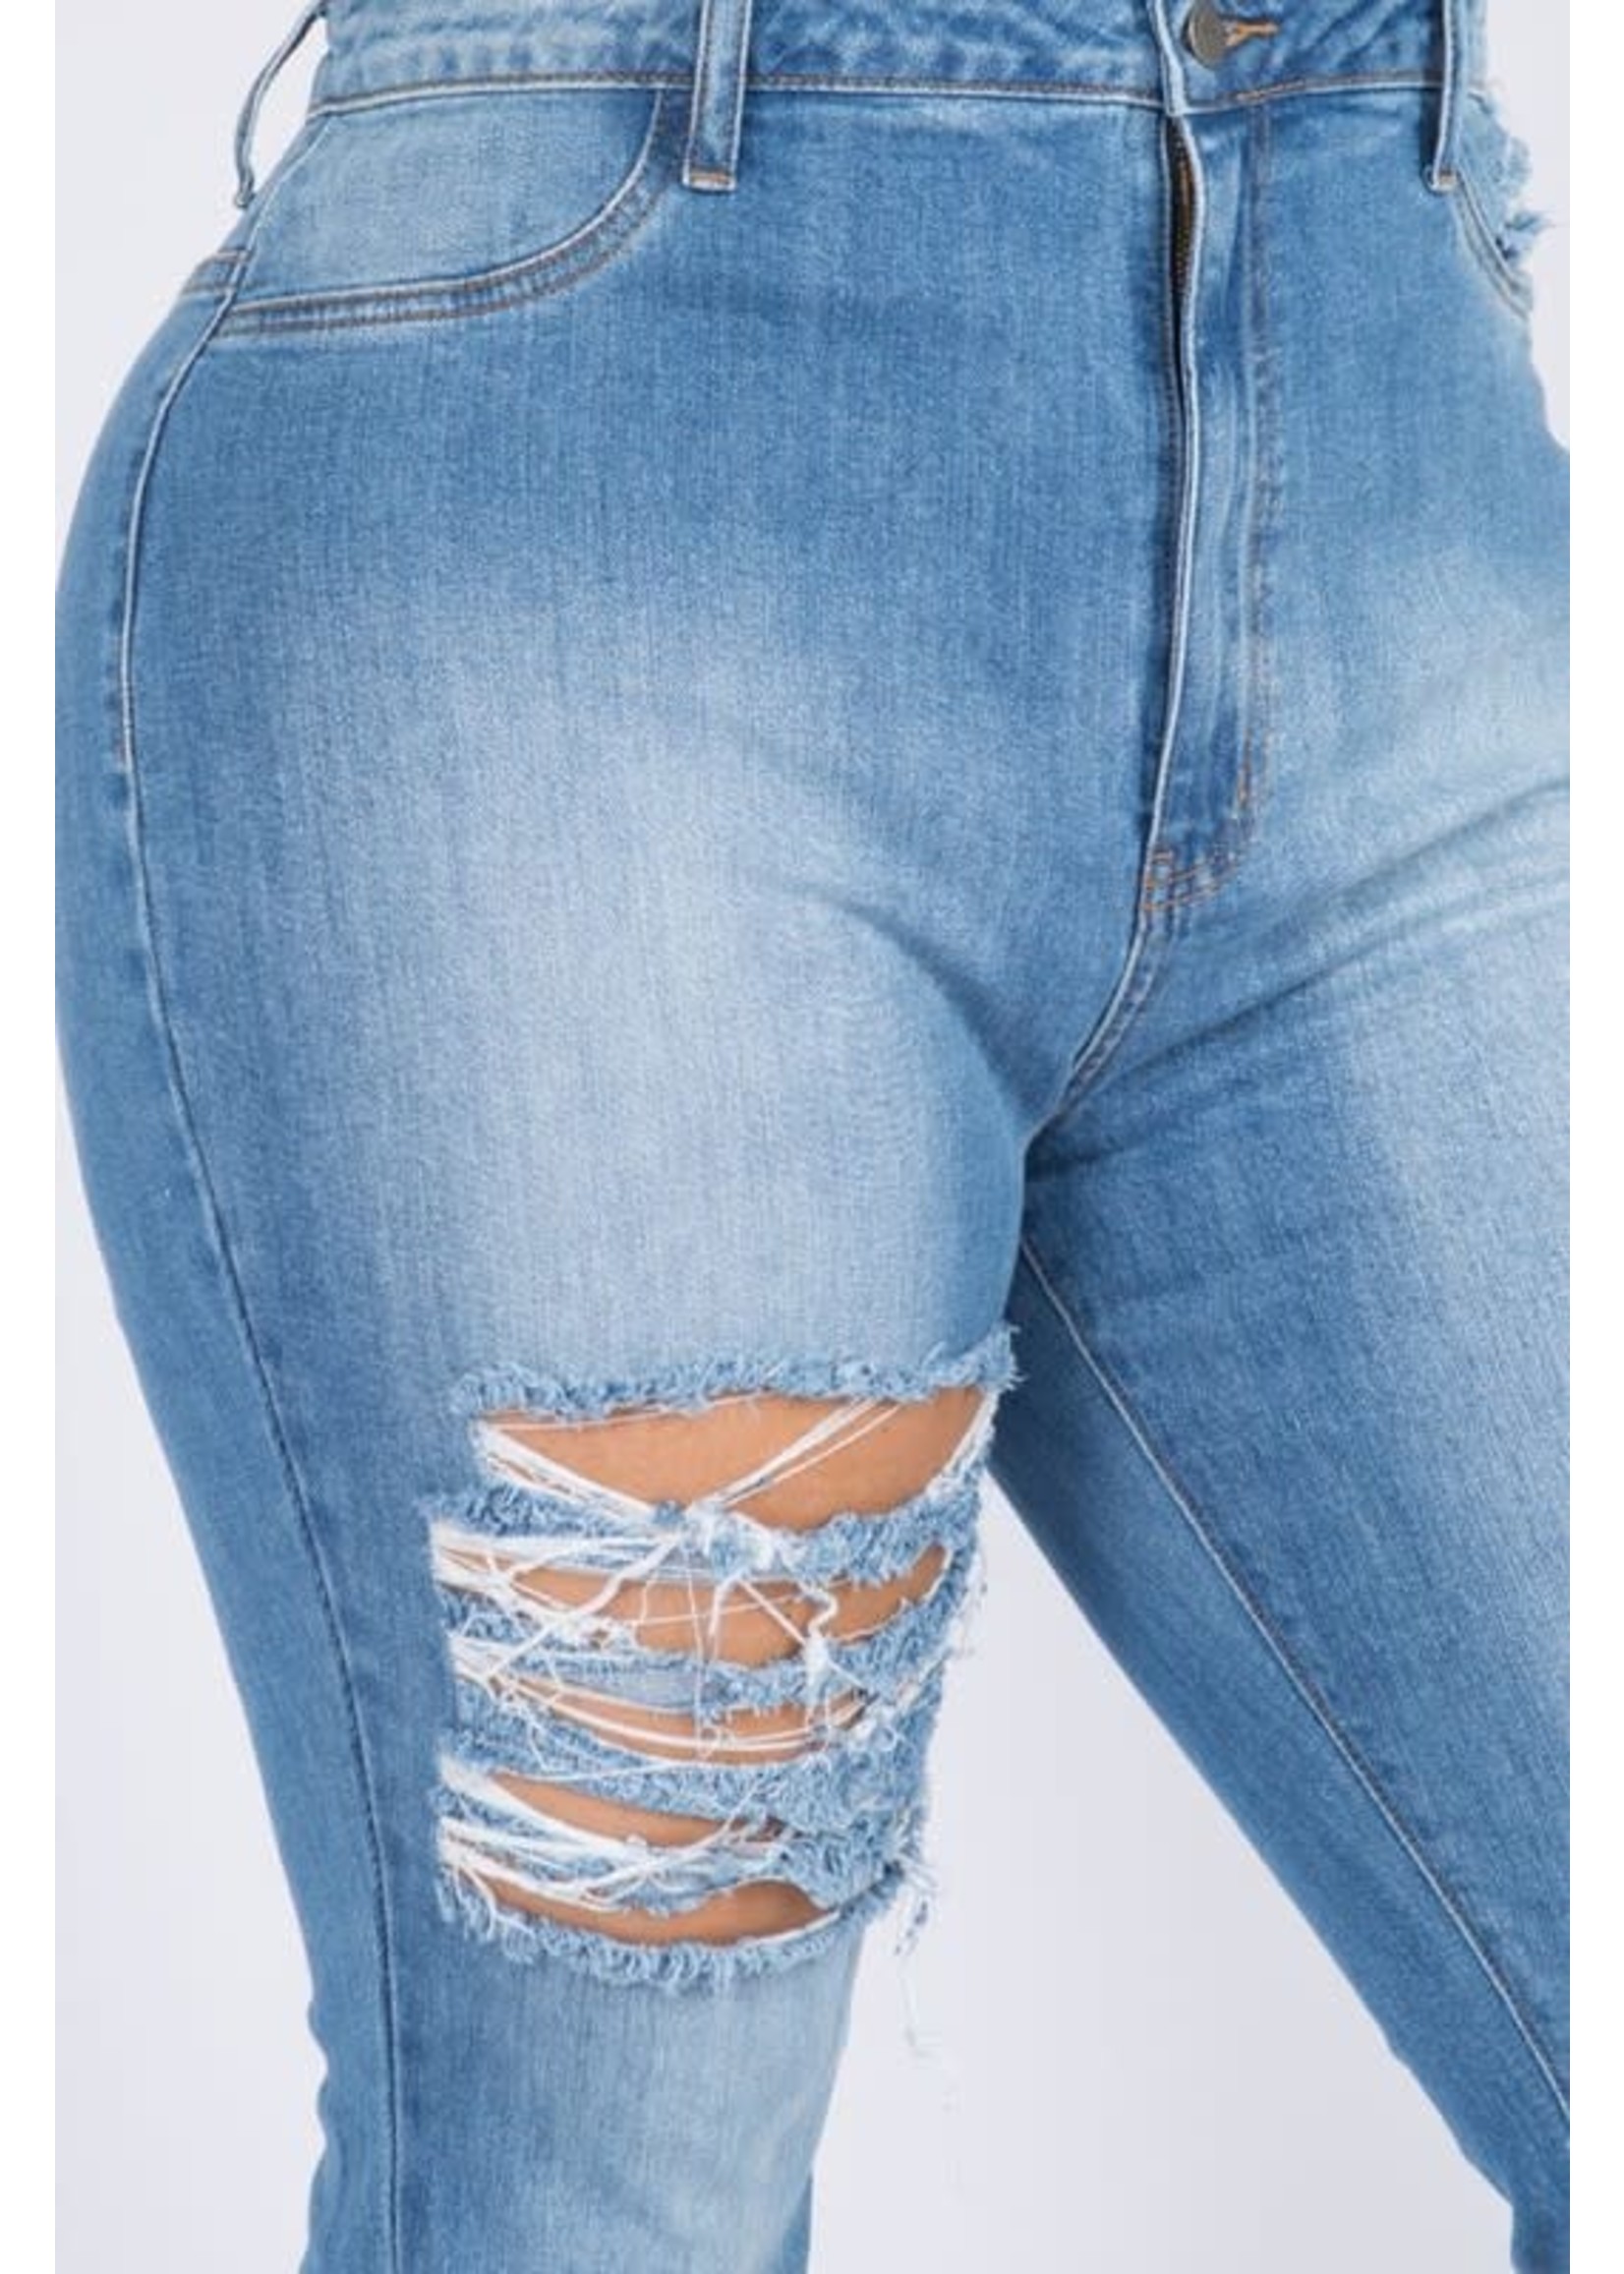 Curvy Distressed Bottom Jean